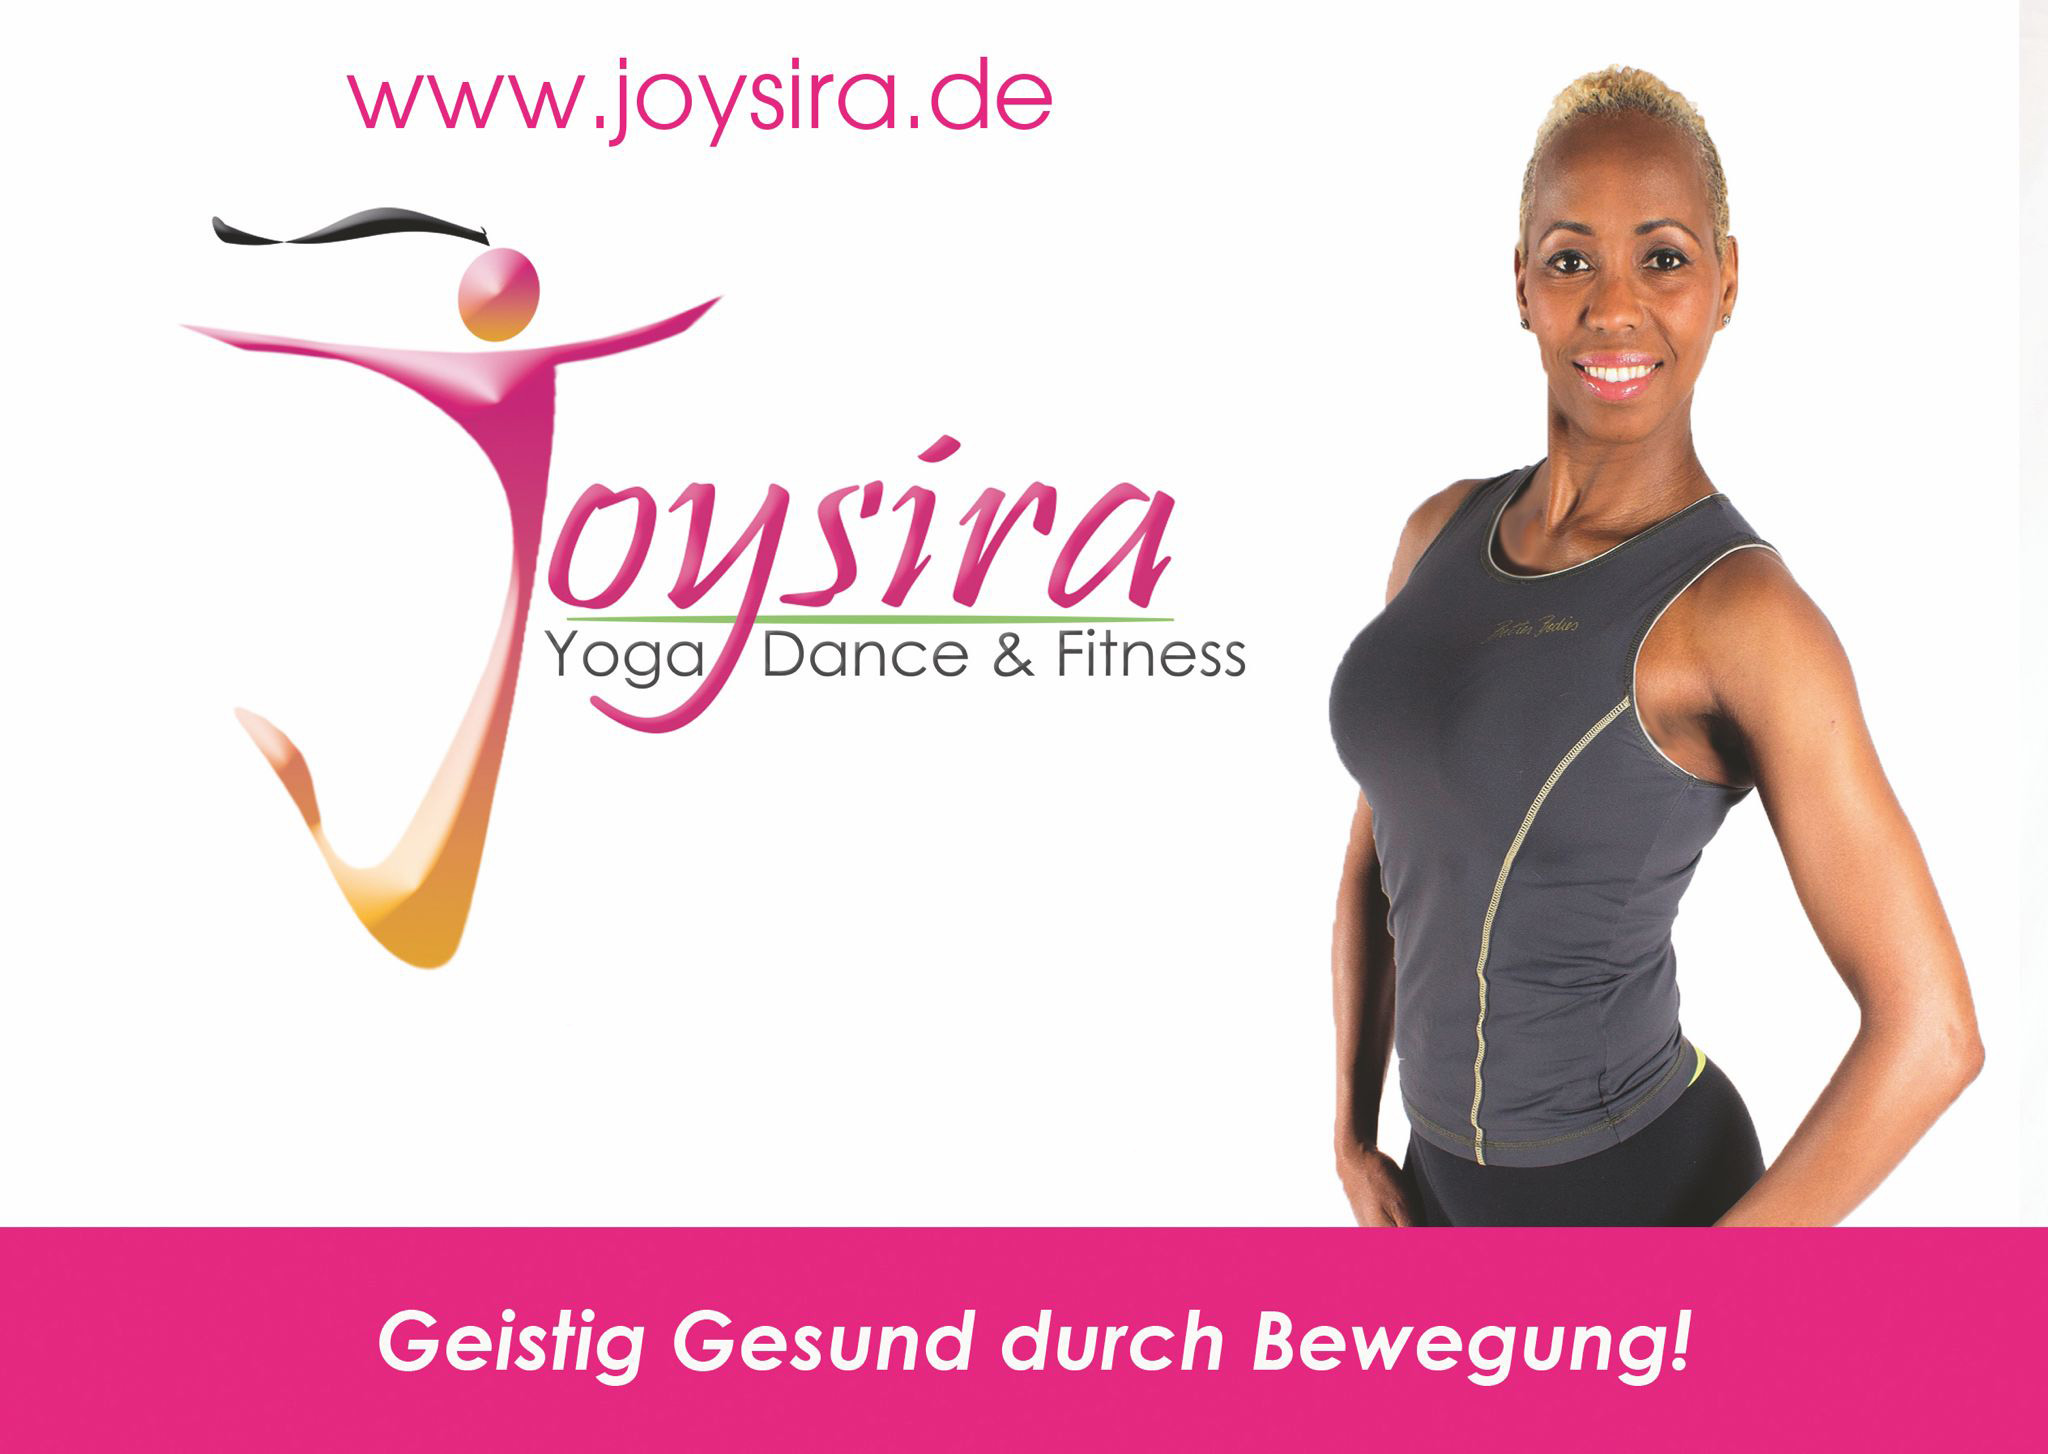 20.72.2023 - Sonnenscheinfest - Joy - Fitness Studio Joysira